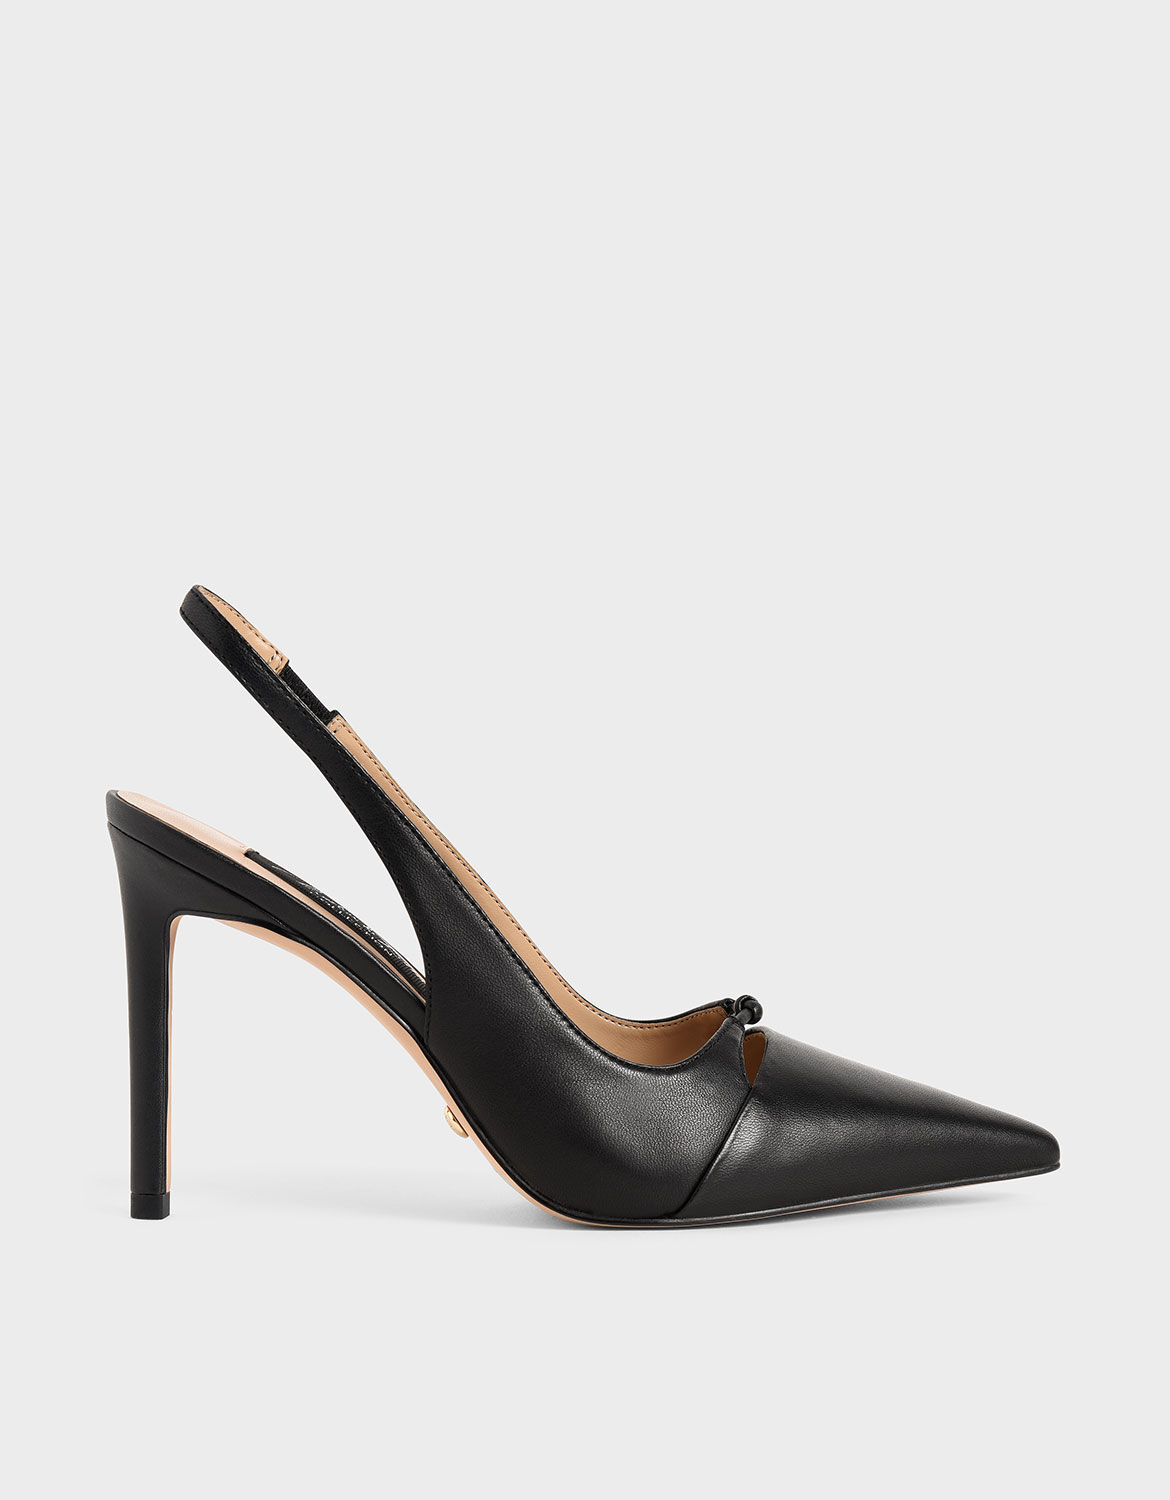 black leather high heel pumps